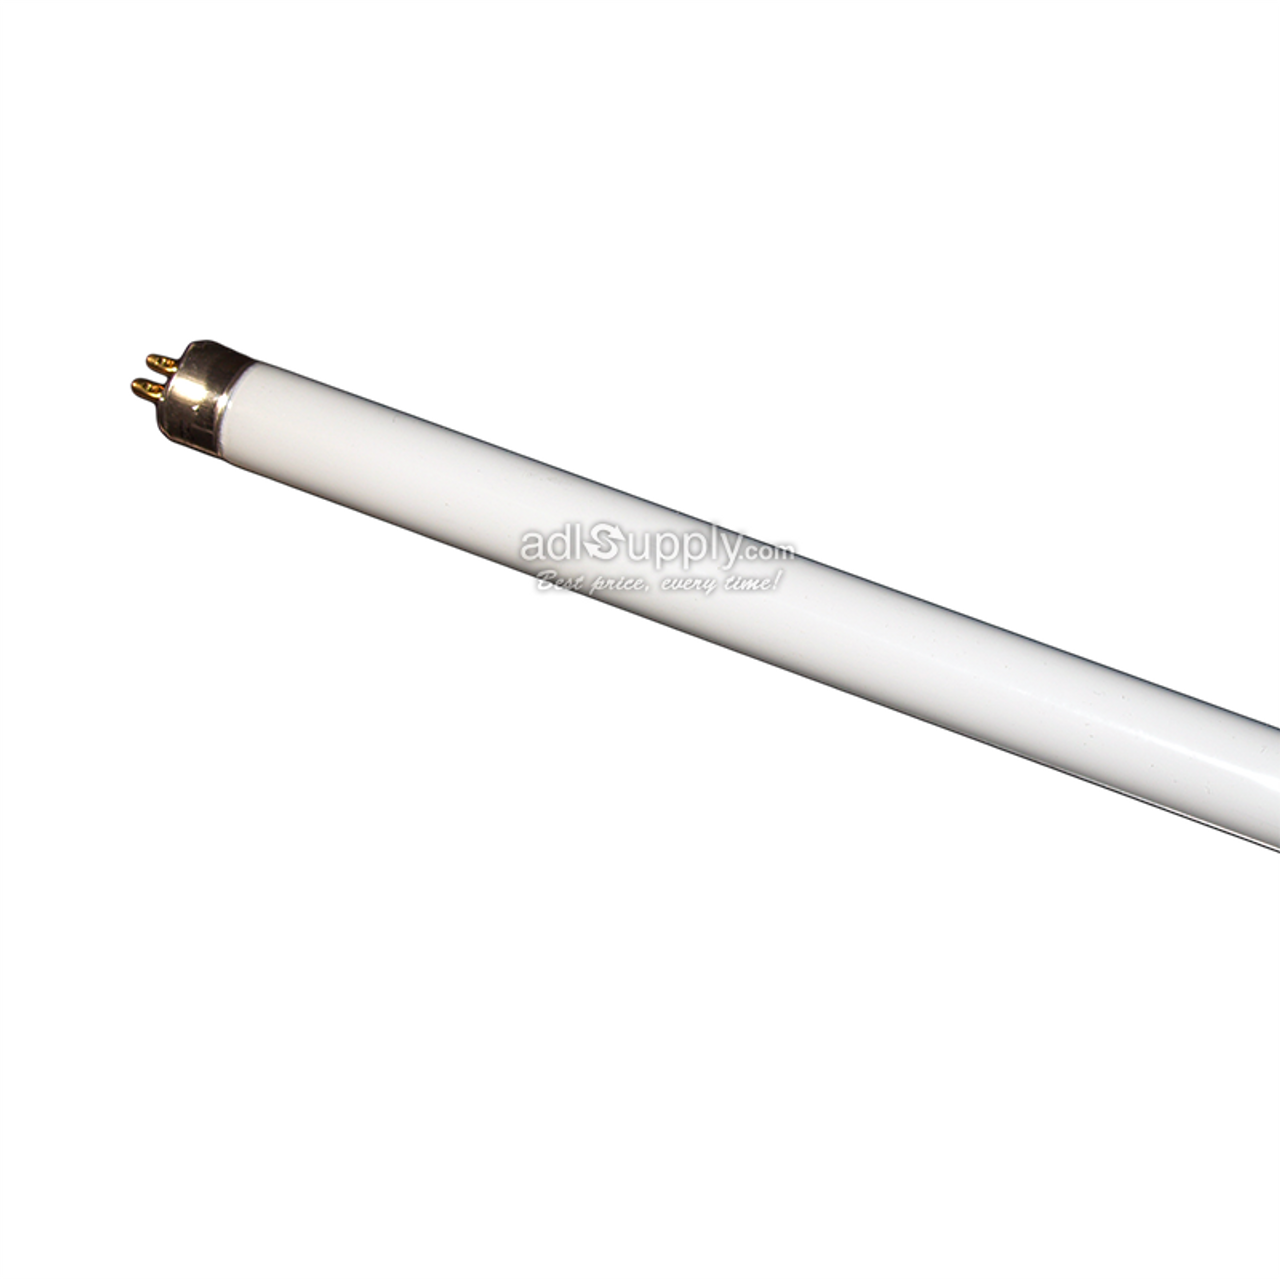 Osram Lumilux DeLuxe 80W T5 Linear Tubular Fluorescent Lamp